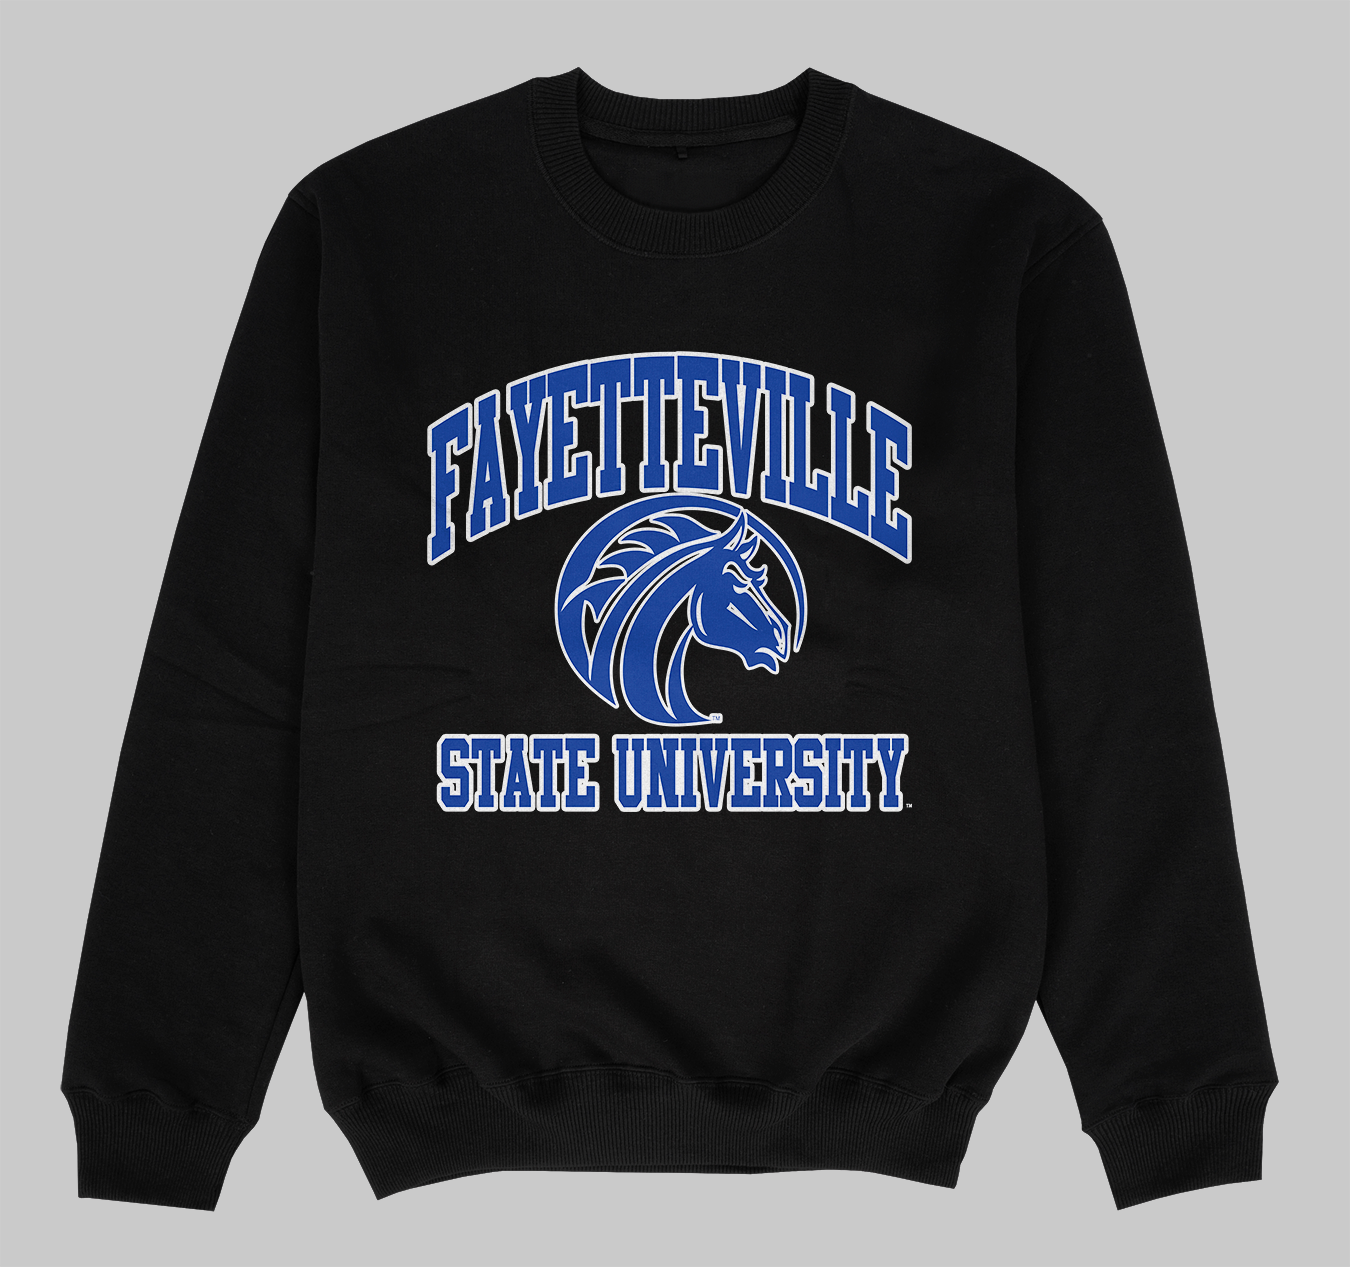 Fayetteville State Legacy Sweatshirt Black